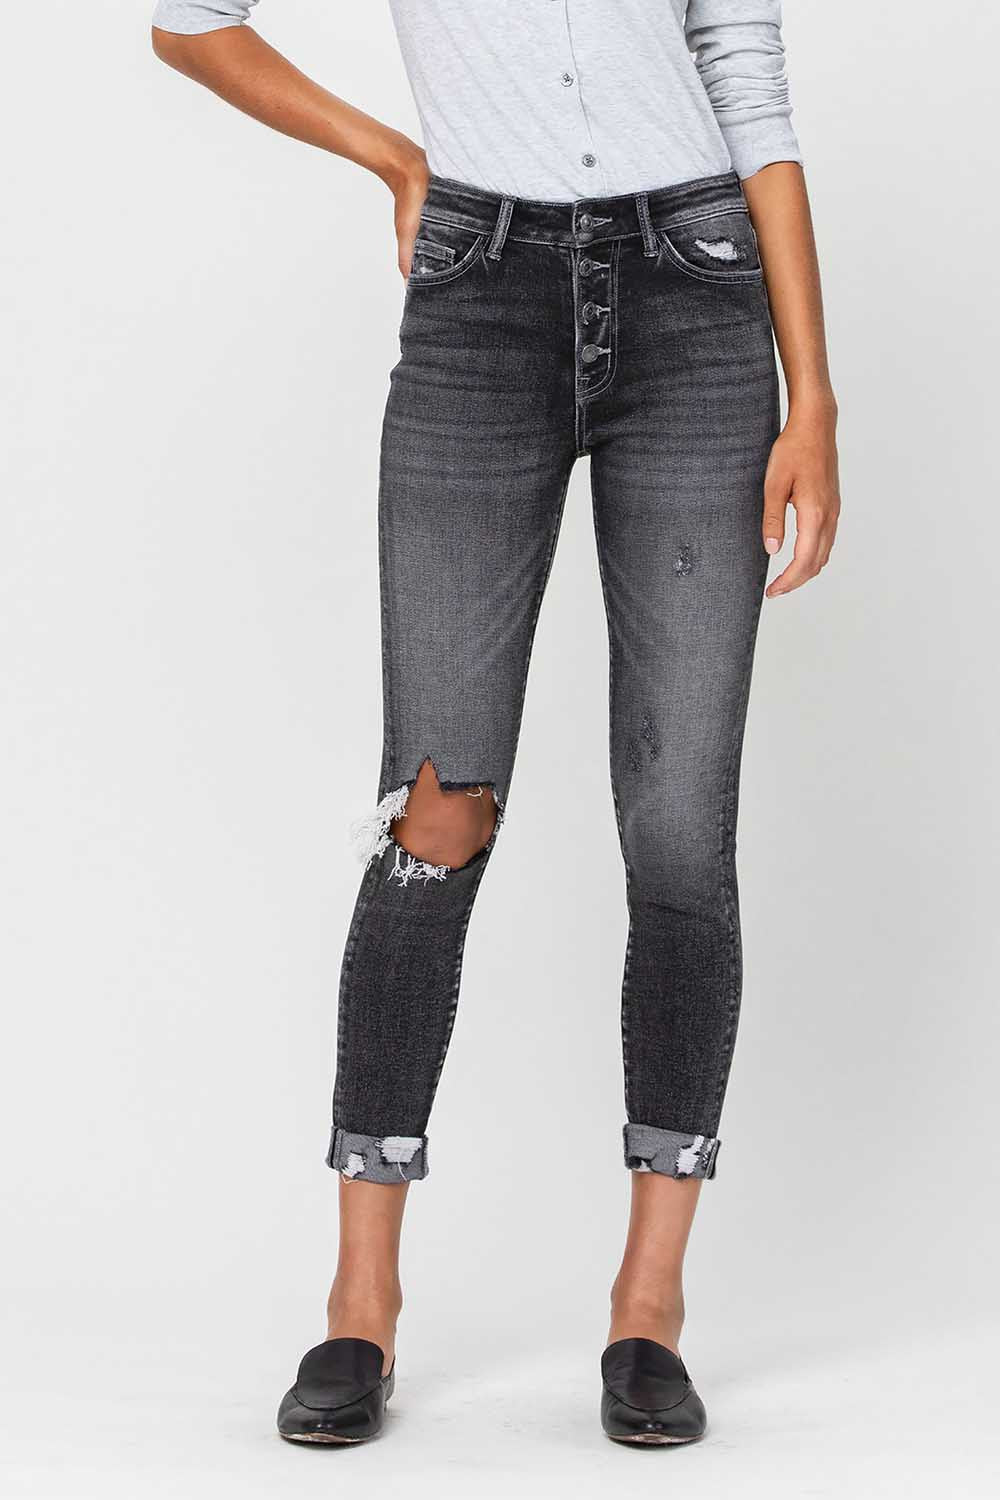 Black Cropped Skinny Jeans